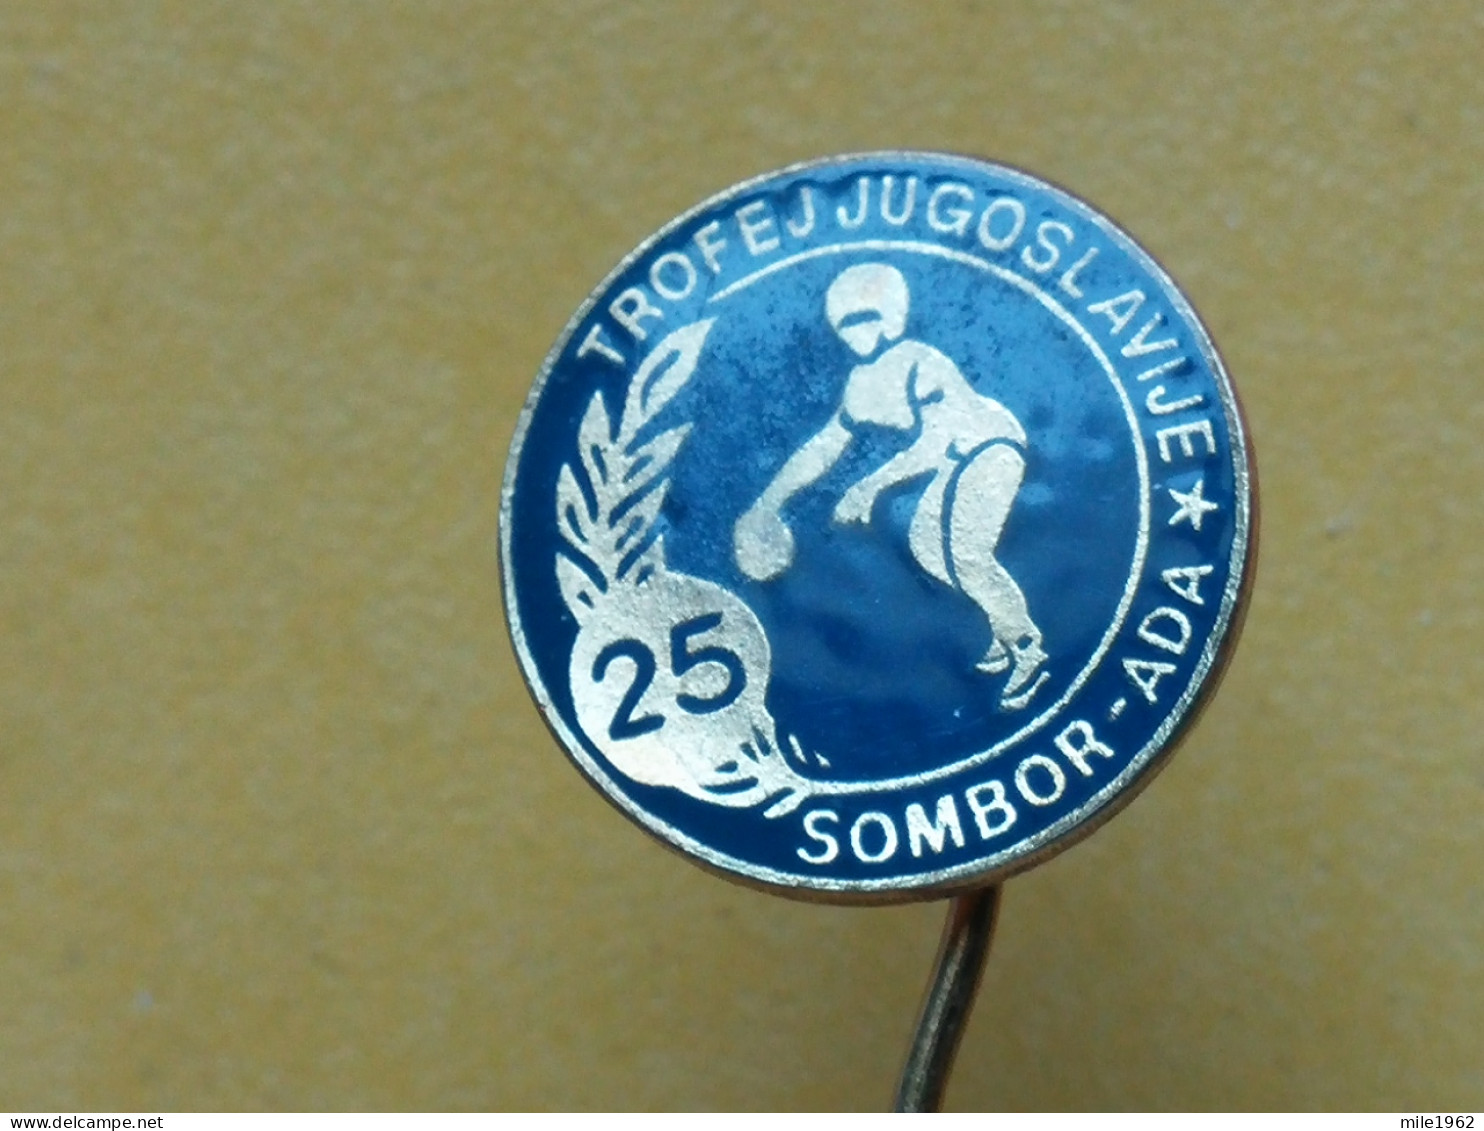 Badge Z-53-1 - BASKETBALL Trofej Jugoslavije, SOMBOR, ADA, SERBIA - Baloncesto